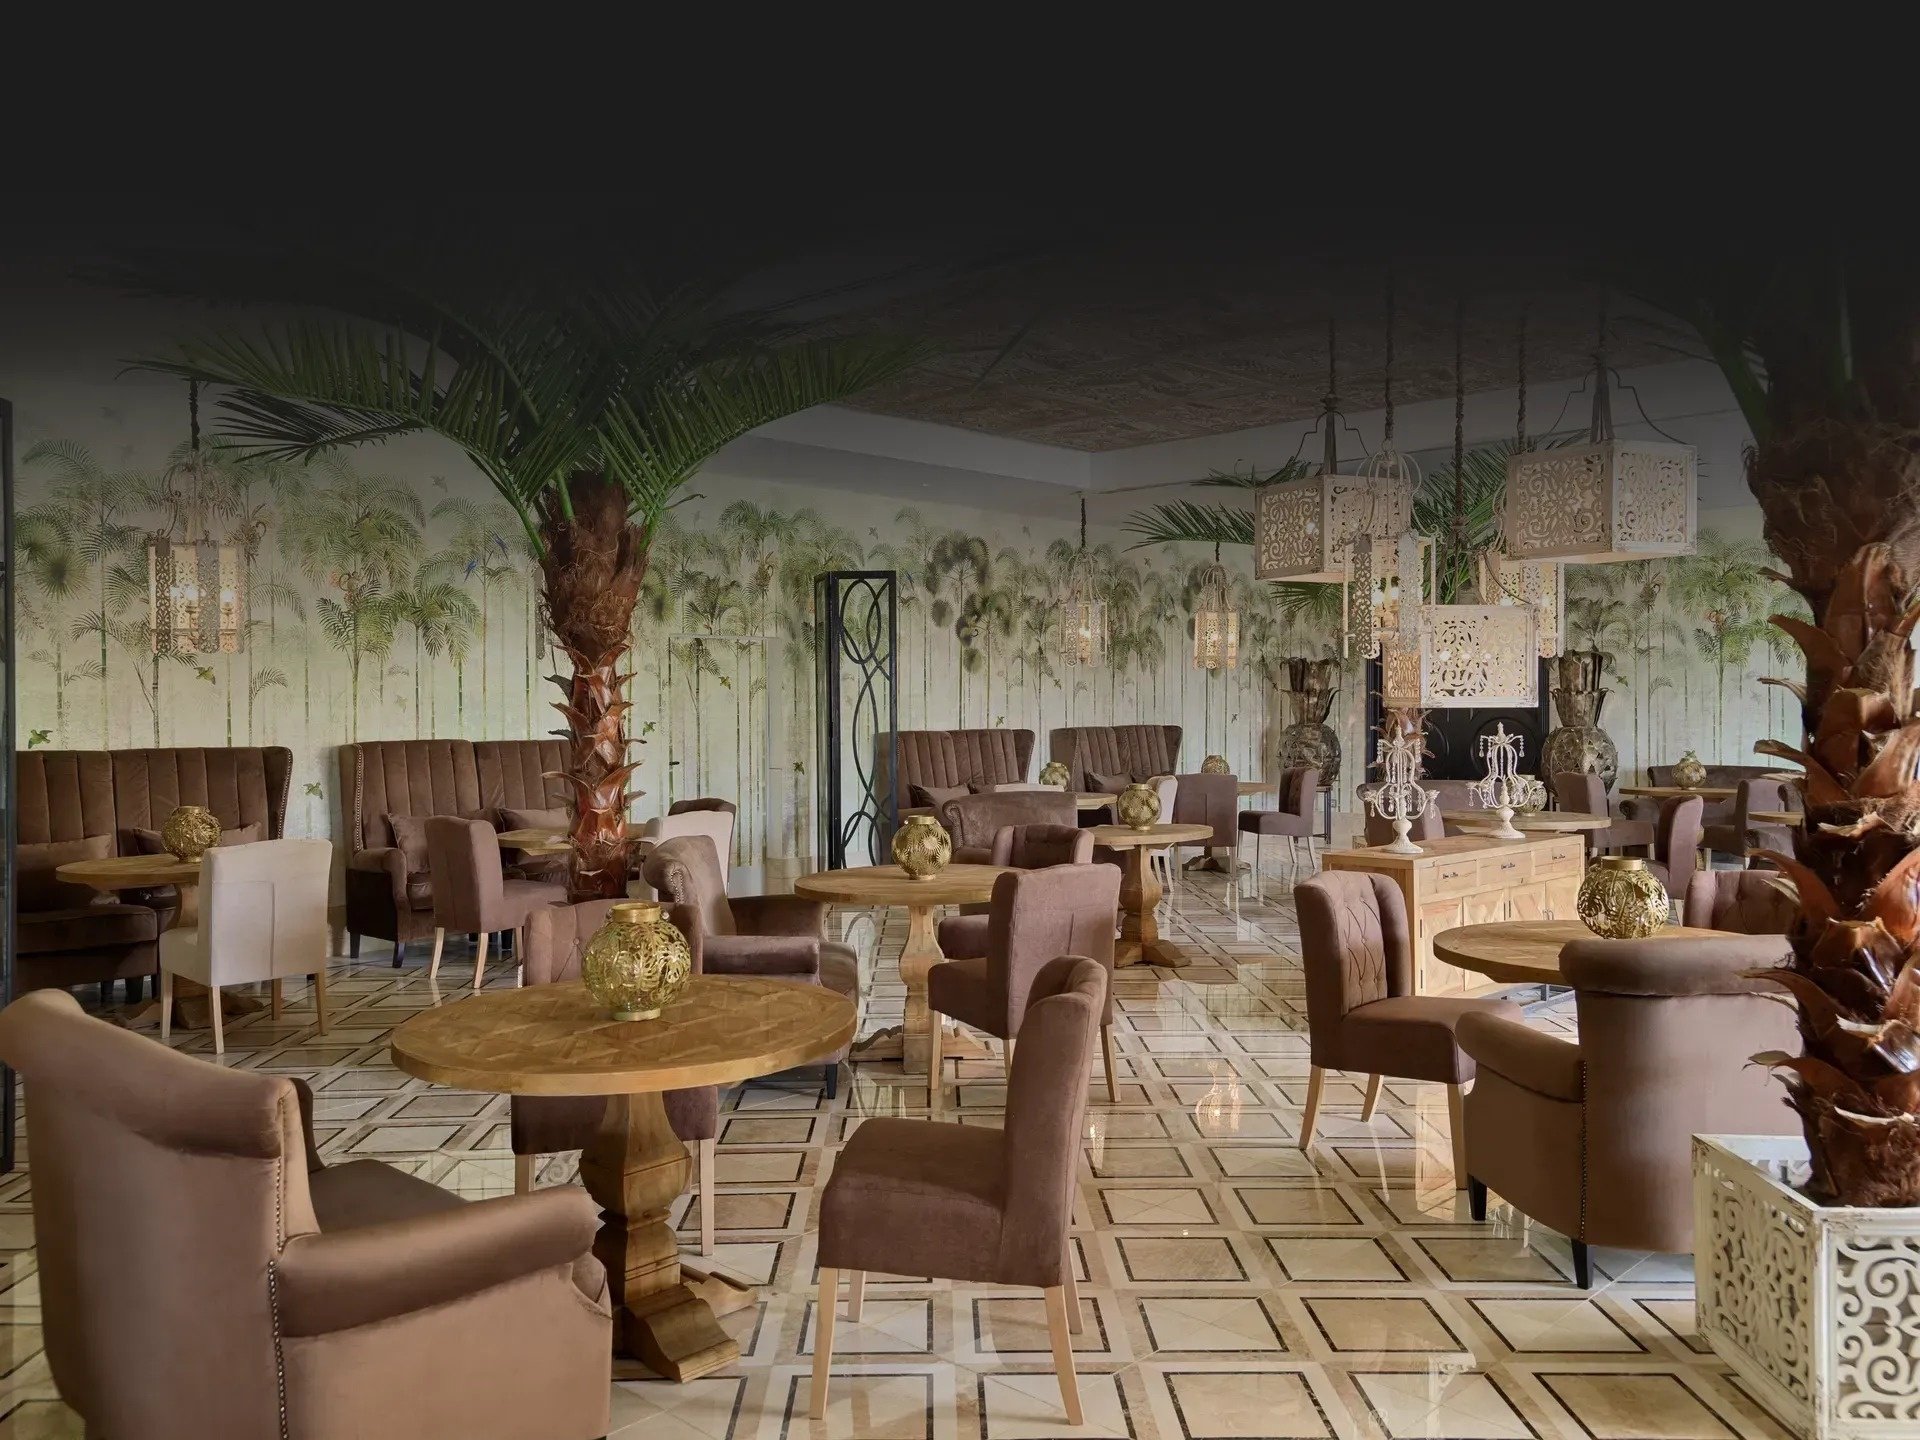 Royal River Luxury Hotel - Pineapple Restaurant 
